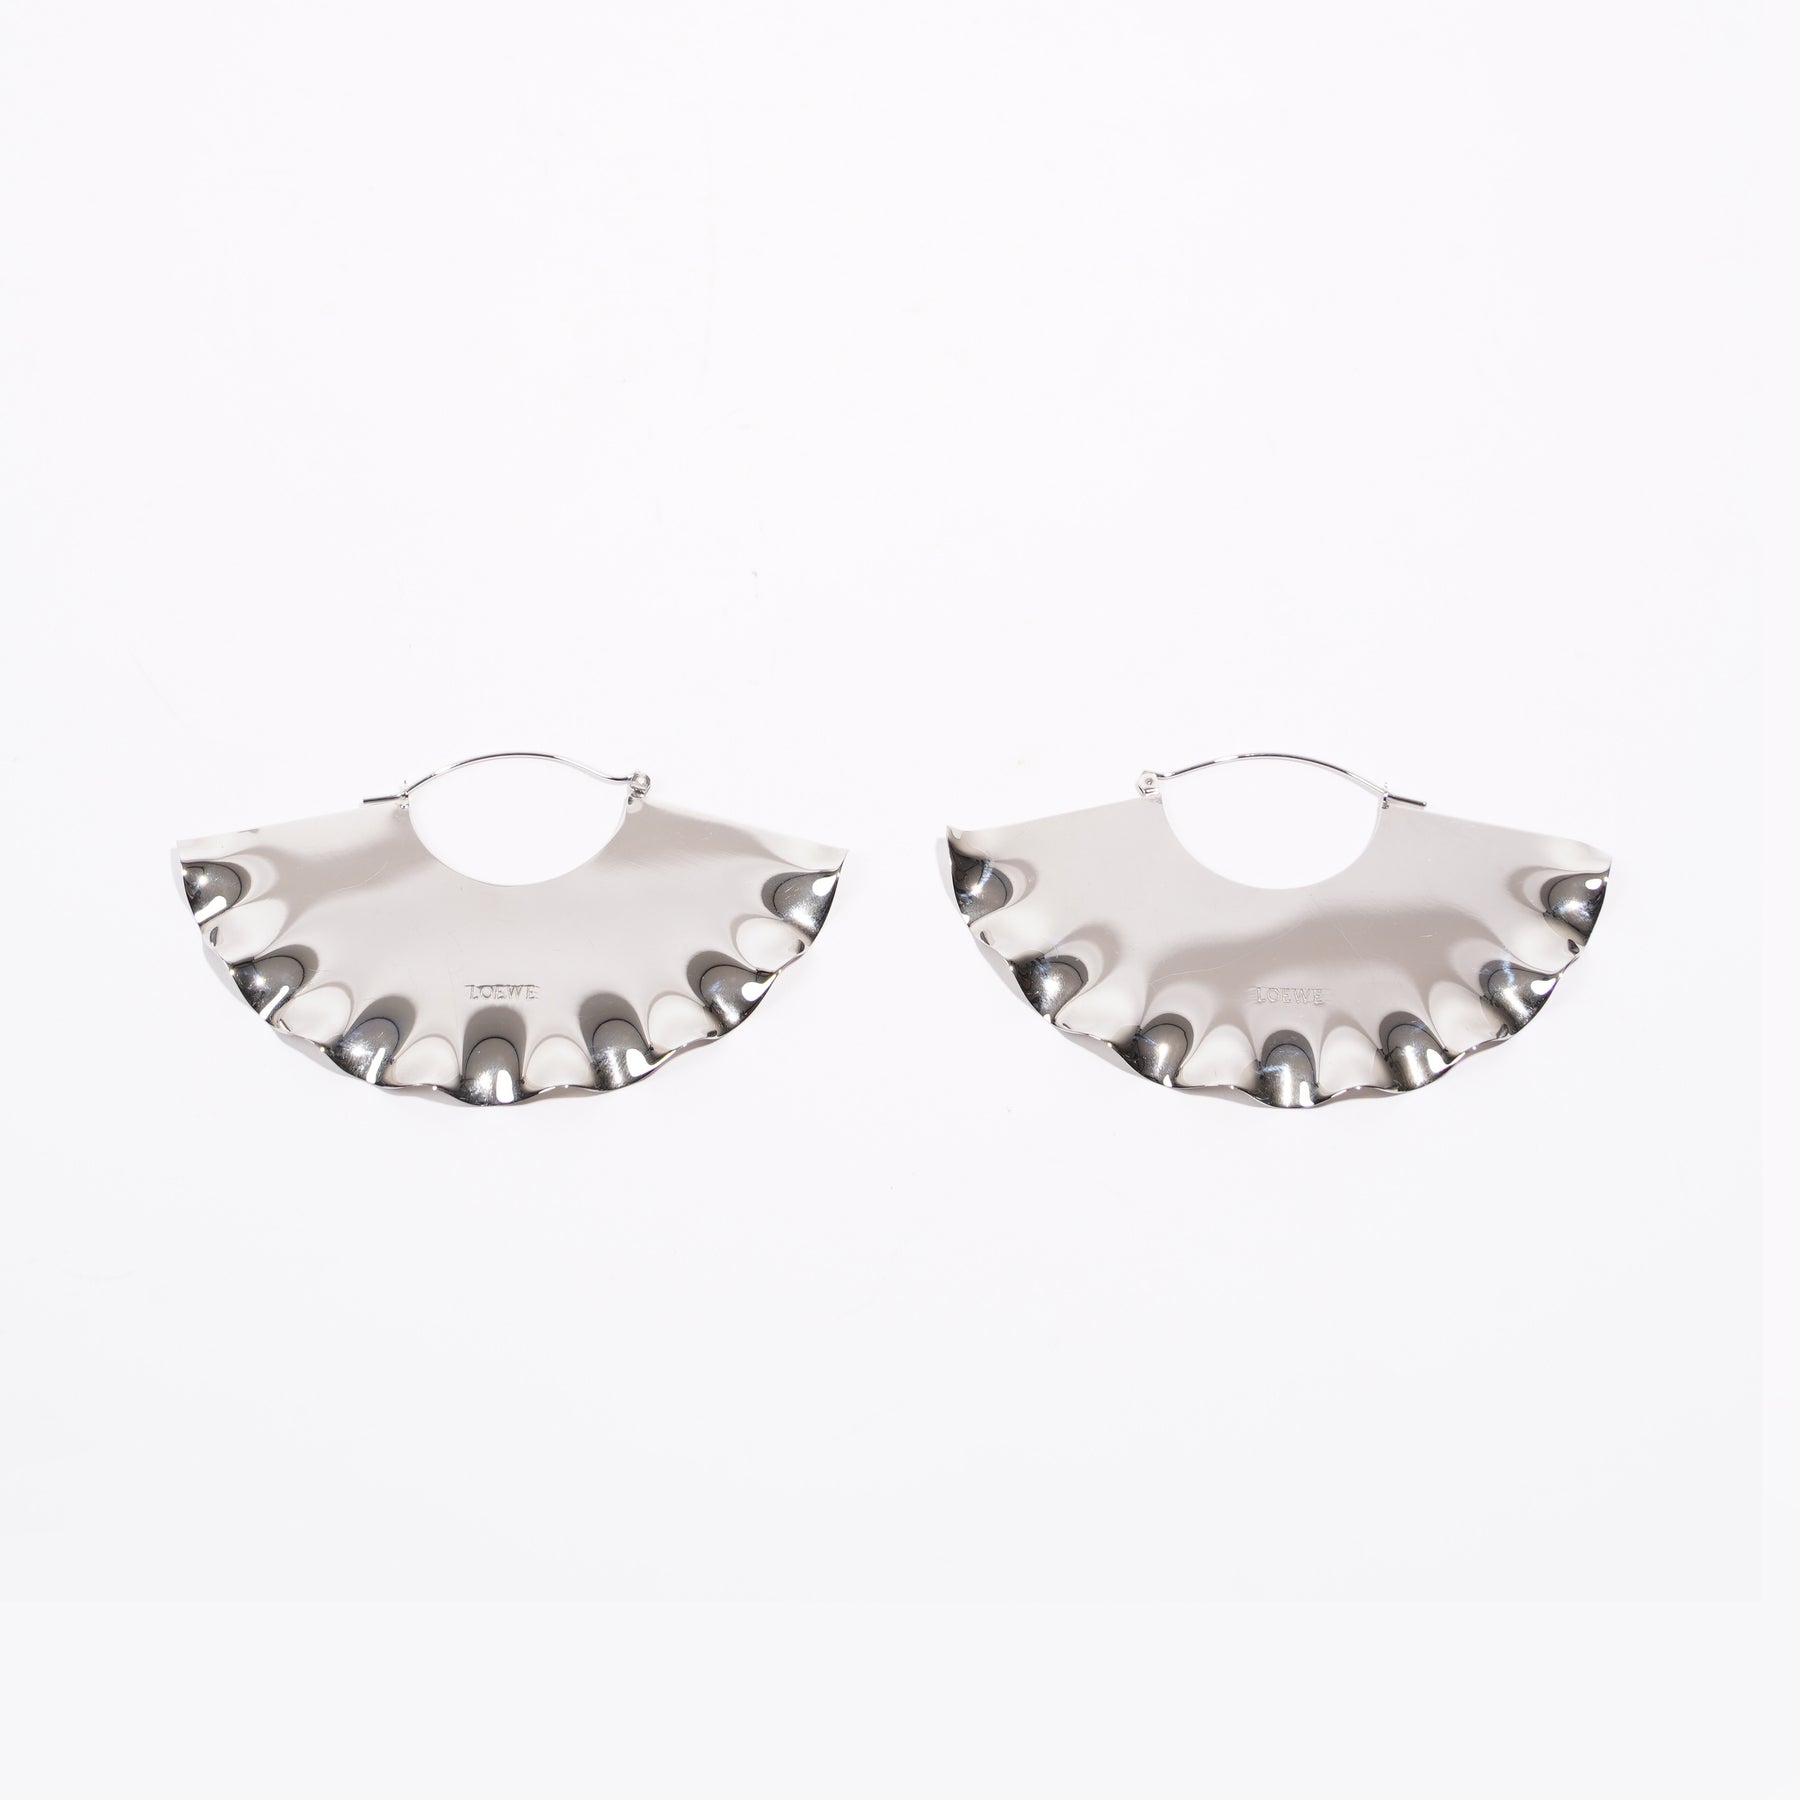 Louis Vuitton Bionic Earrings in Metallic